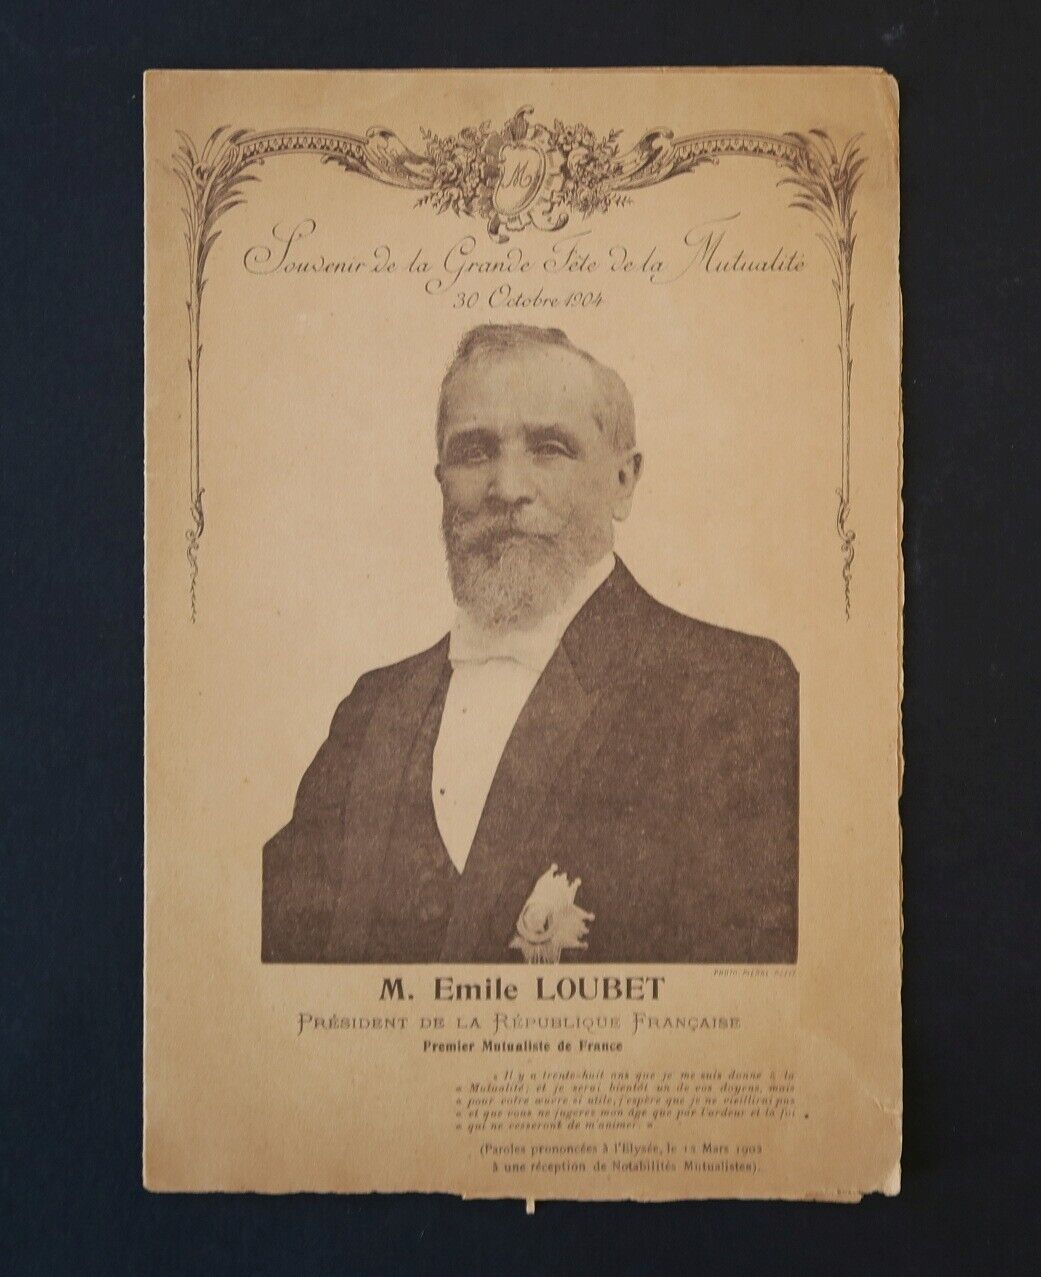 Presidency Republic Menu October 30, 1904 Presidential President Emile LOUBET 